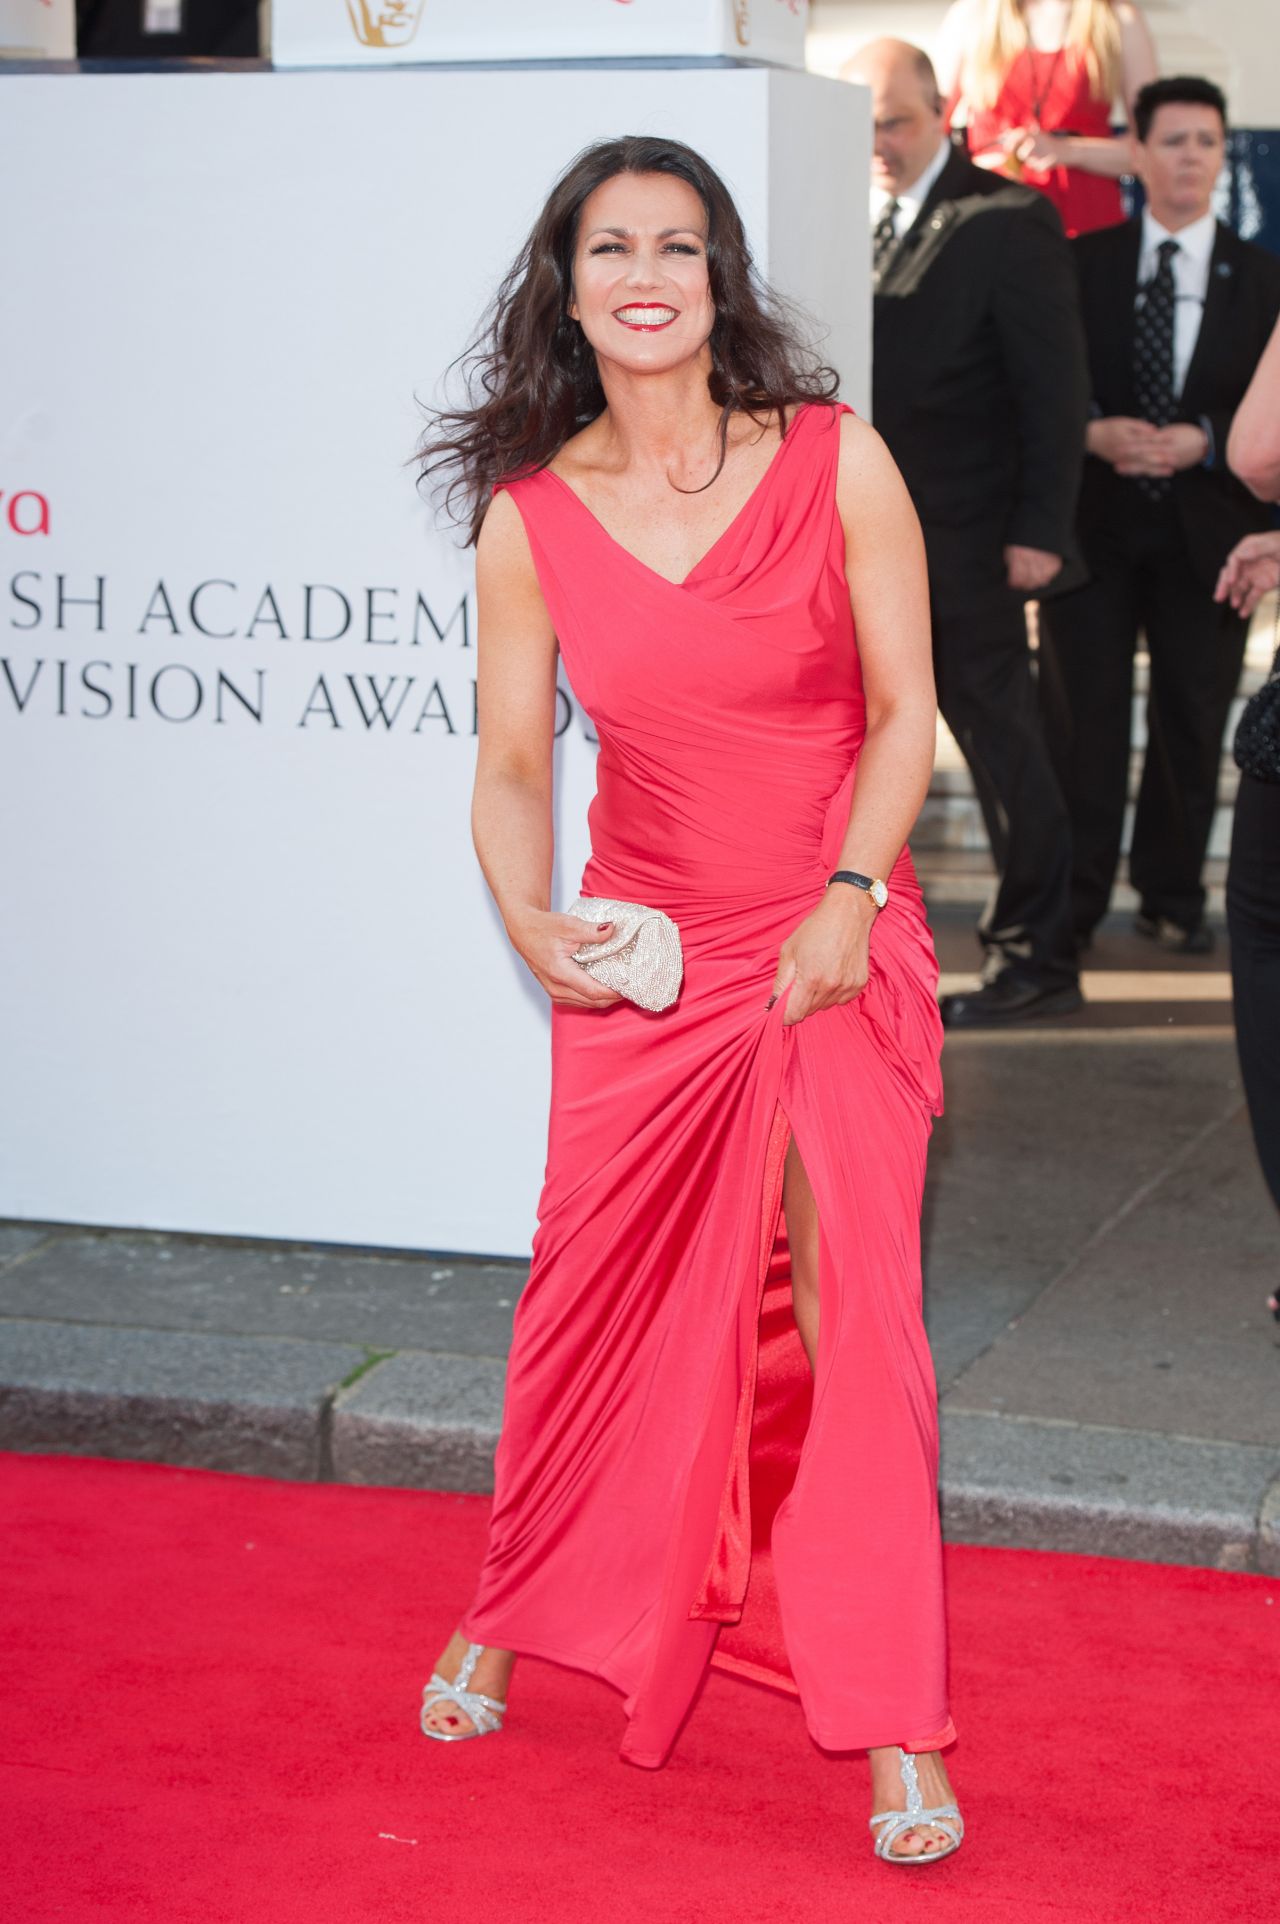 SUSANNA REID AT 2014 BRITISH ACADEMY TELEVISION AWARDS IN LONDON10